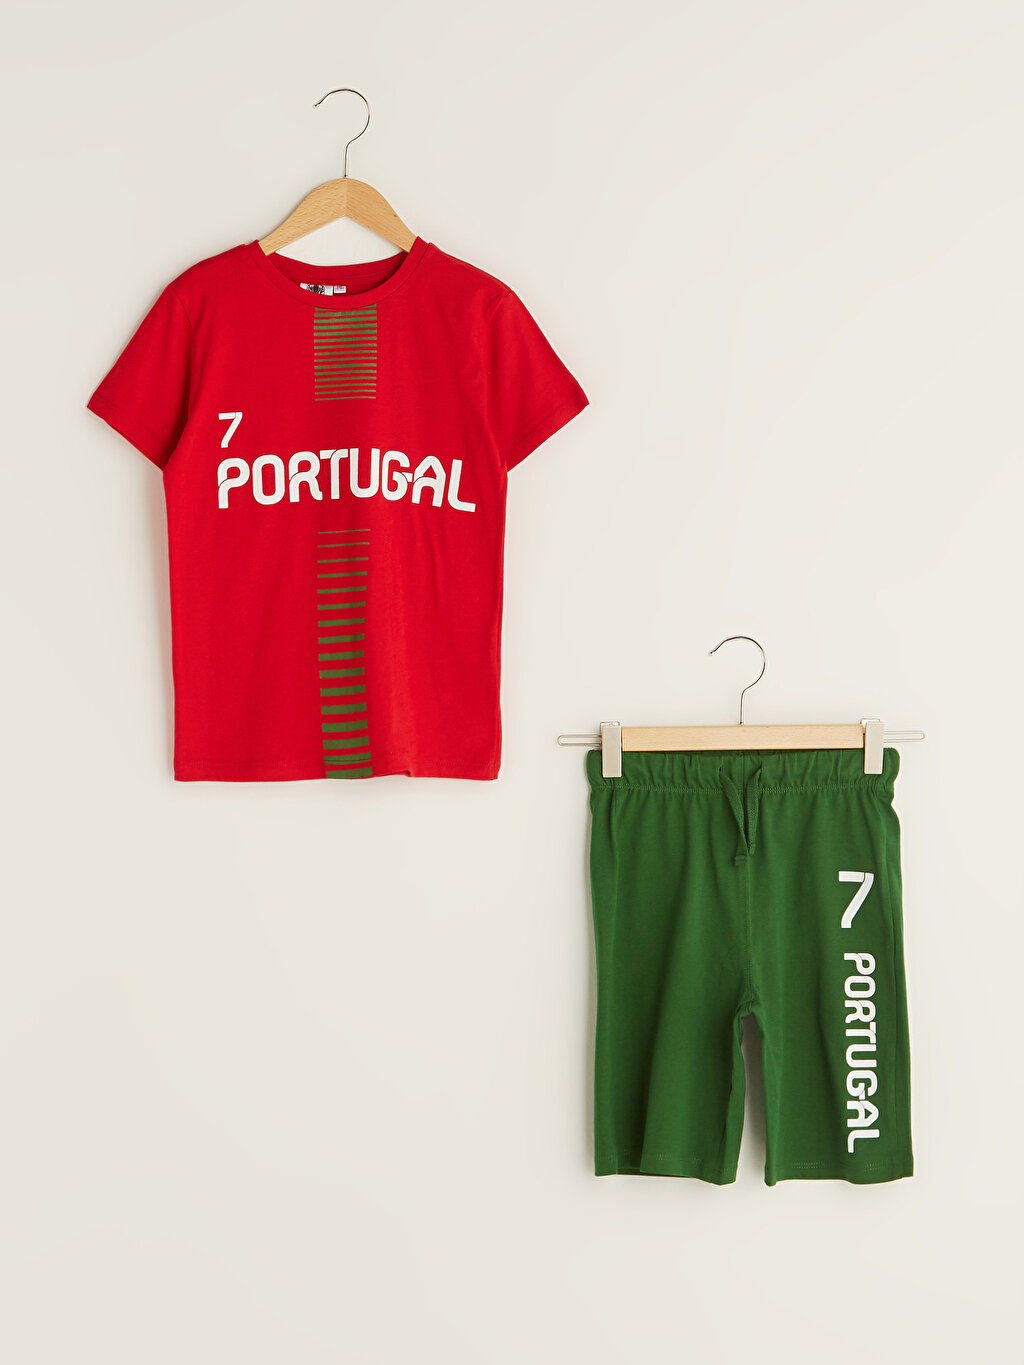 Crew Neck EURO 2020 Portugal Printed Short Sleeve Boy's T-Shirt and Shorts  -S1AD86Z4-RAV - S1AD86Z4-RAV - LC Waikiki